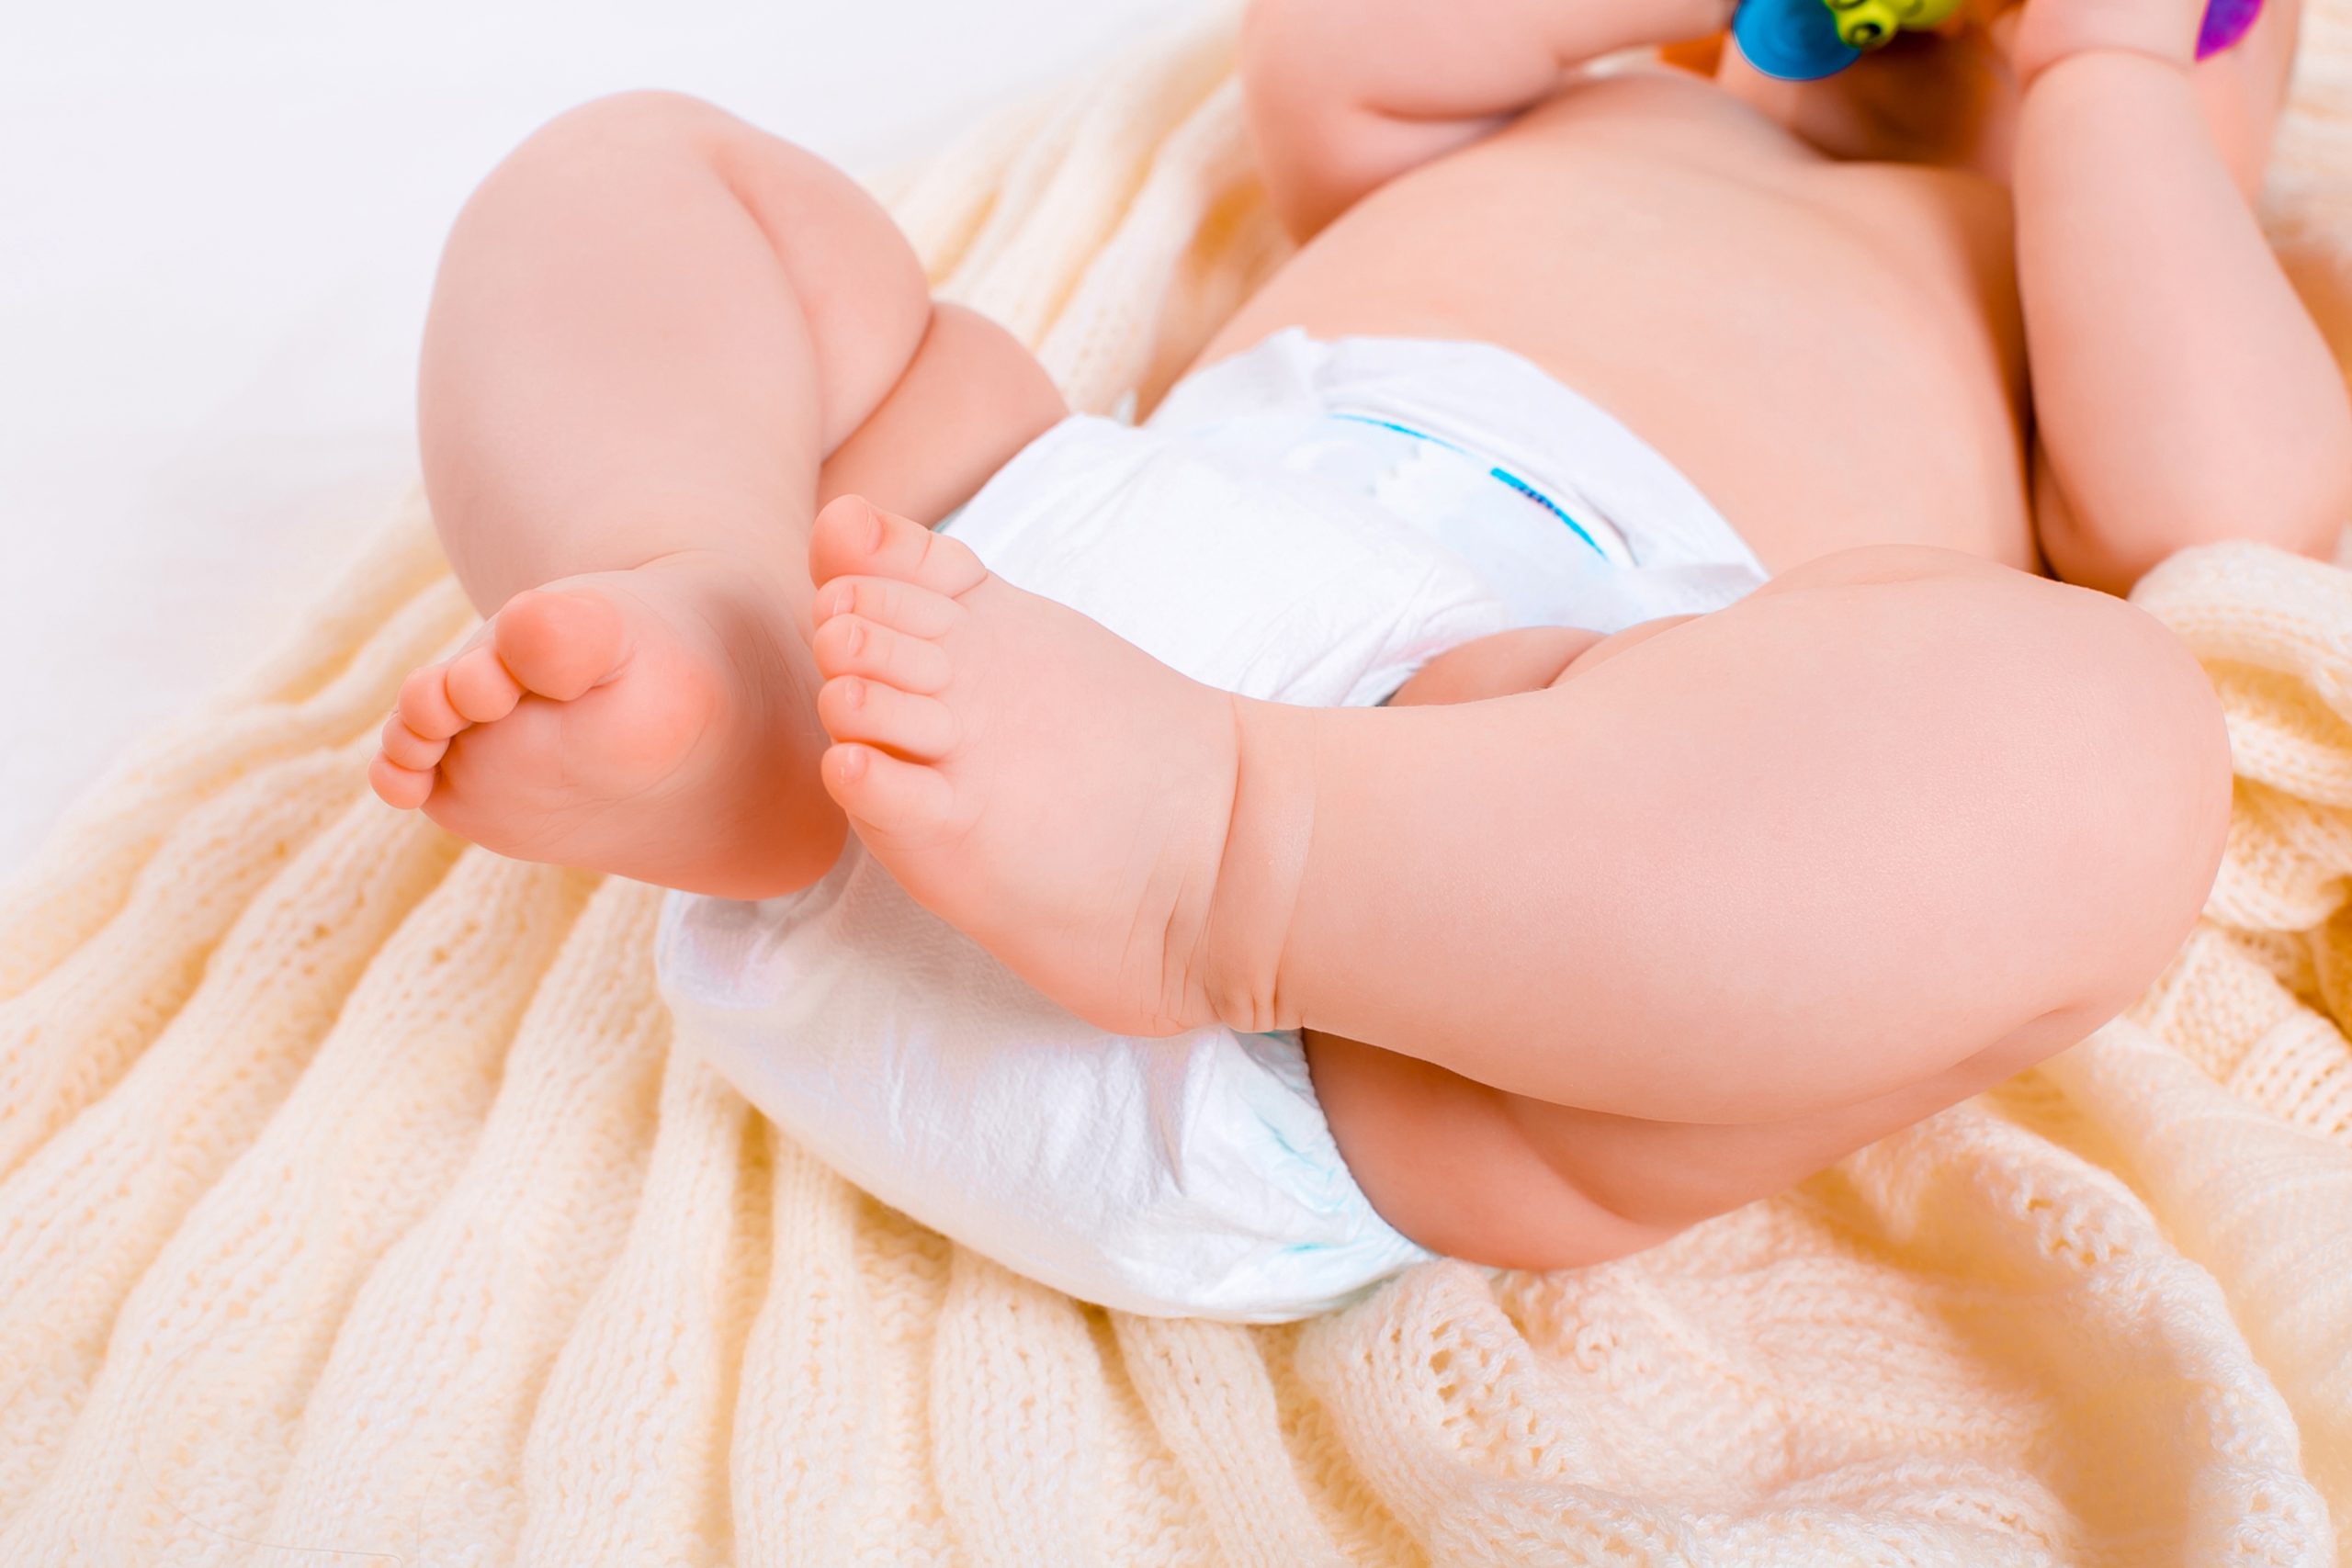 Encontrados químicos perigosos em fraldas para bebés